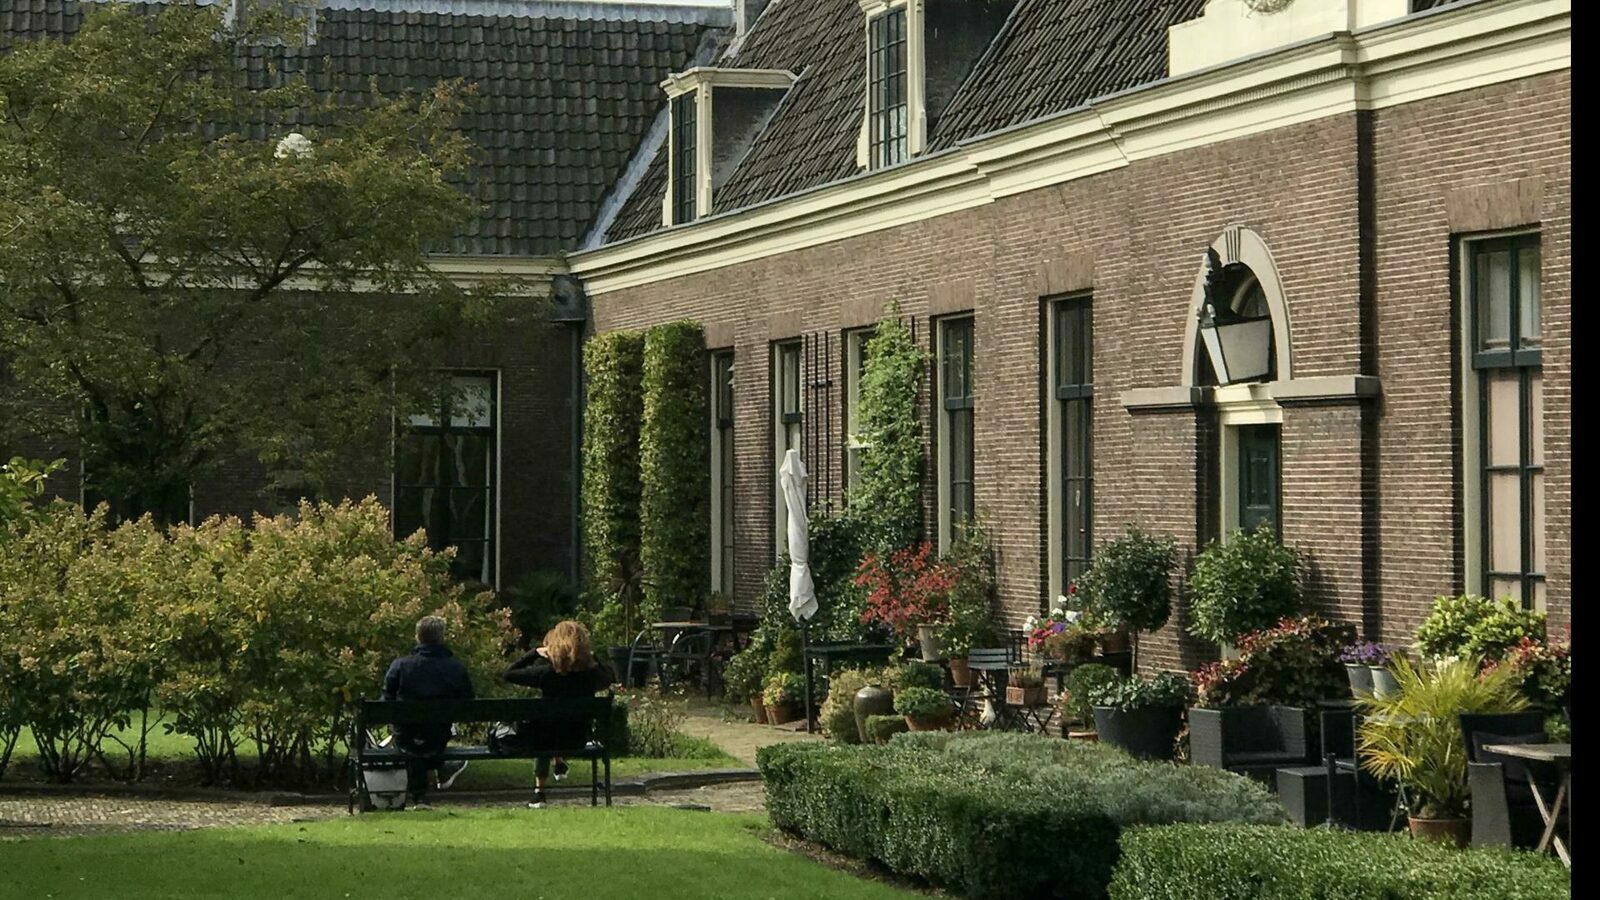 Hofjestocht Haarlem